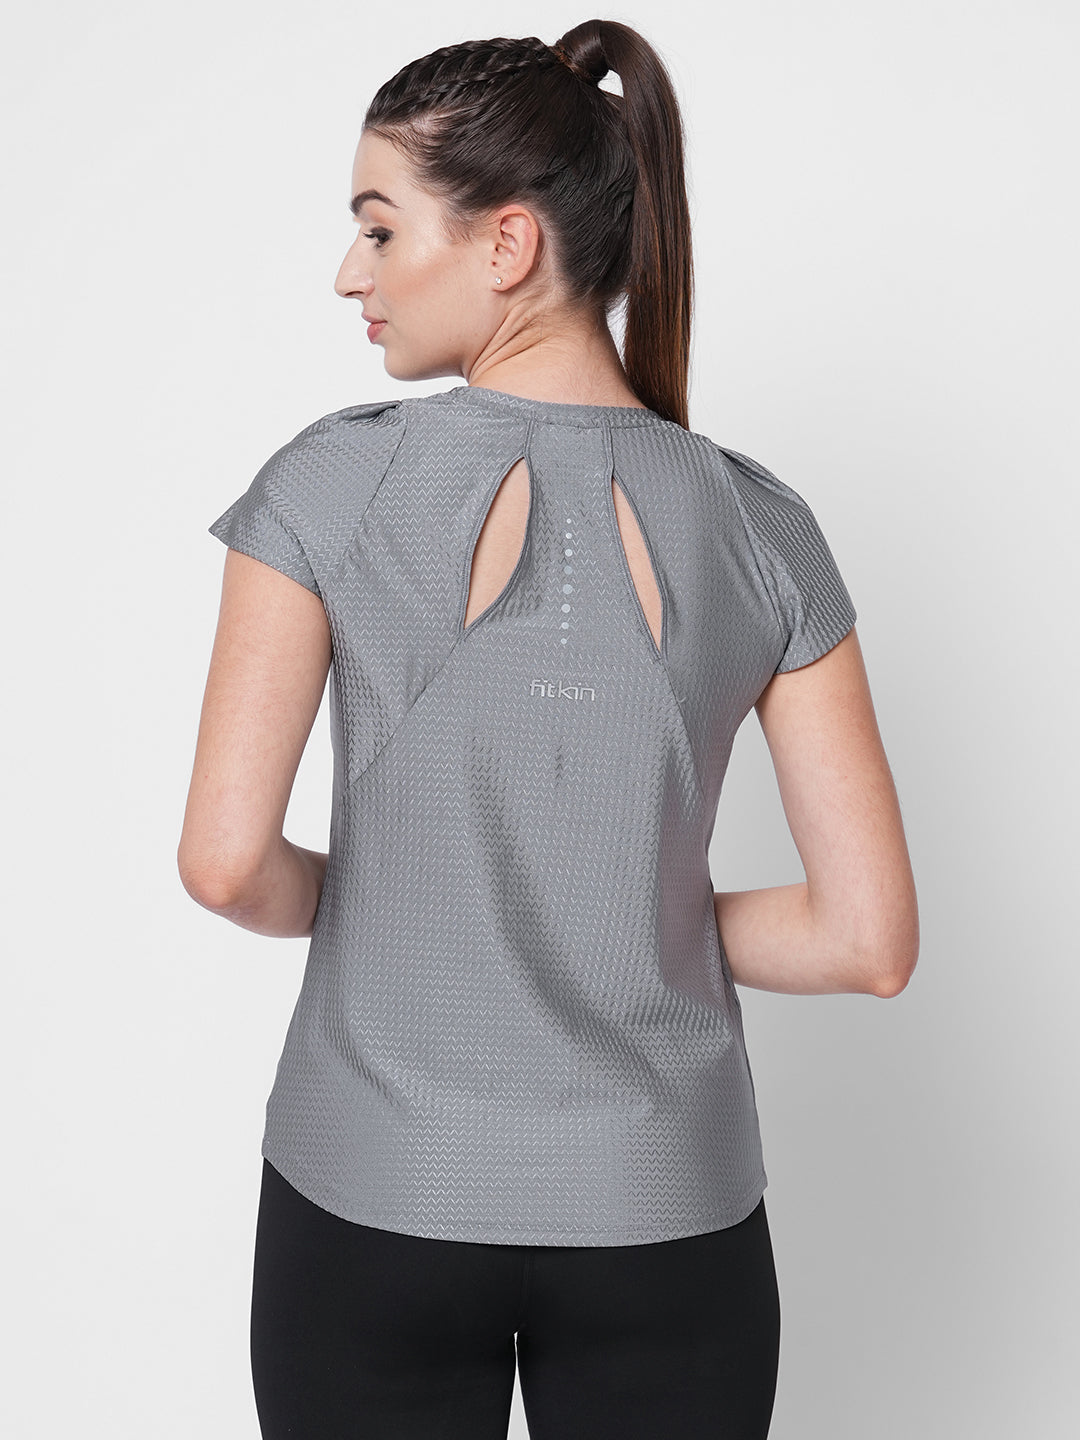 Fitkin women grey self design tshirt with back keyhole design